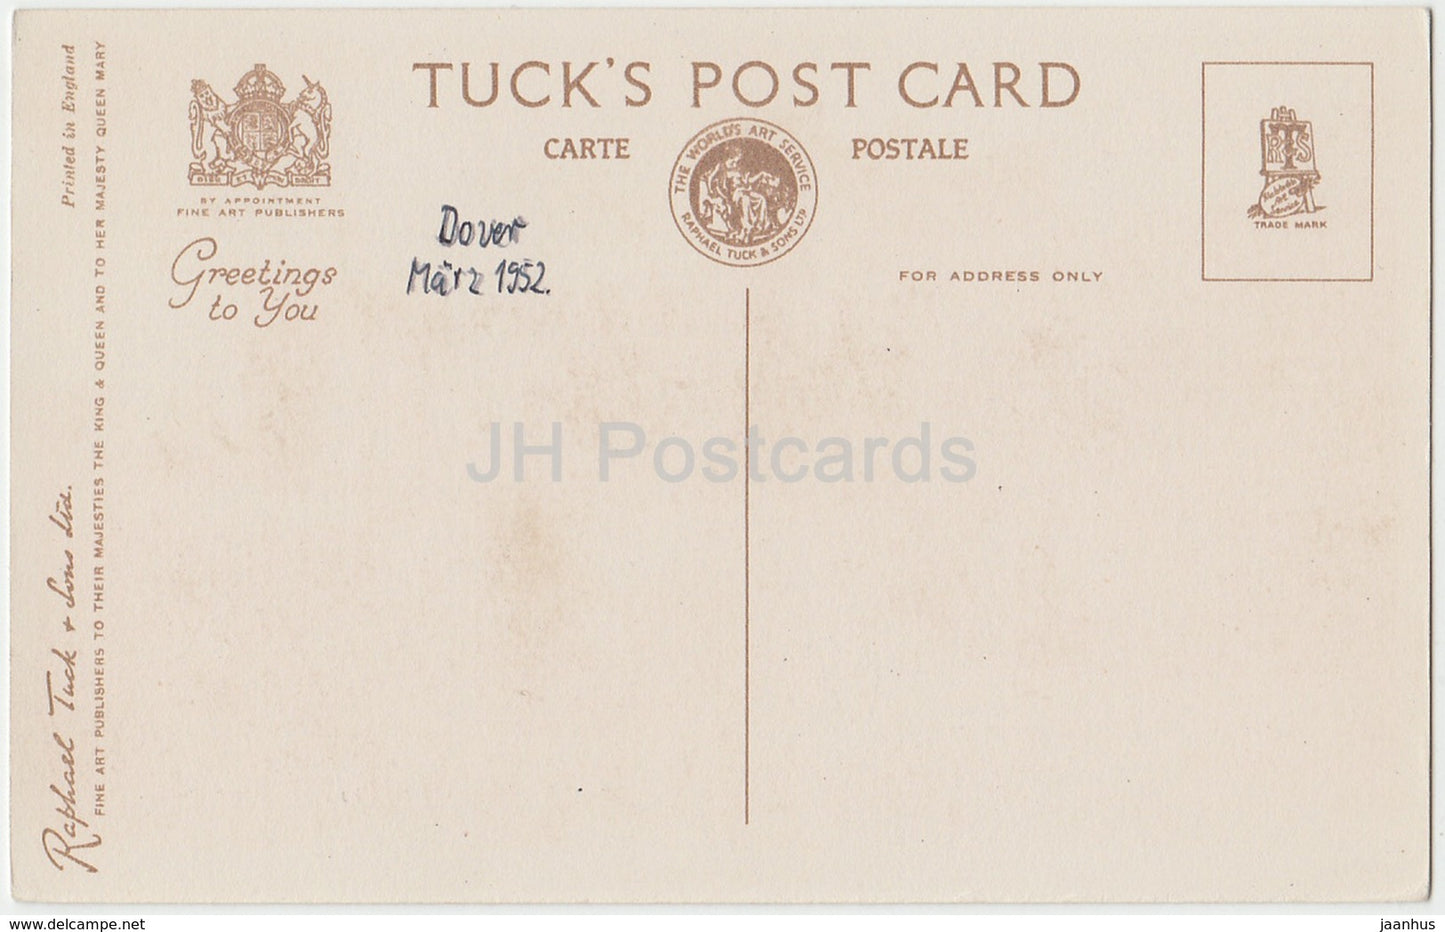 Dover Castle - DVR 10 - Tuck' s Post Card - 1952 - United Kingdom - England - used